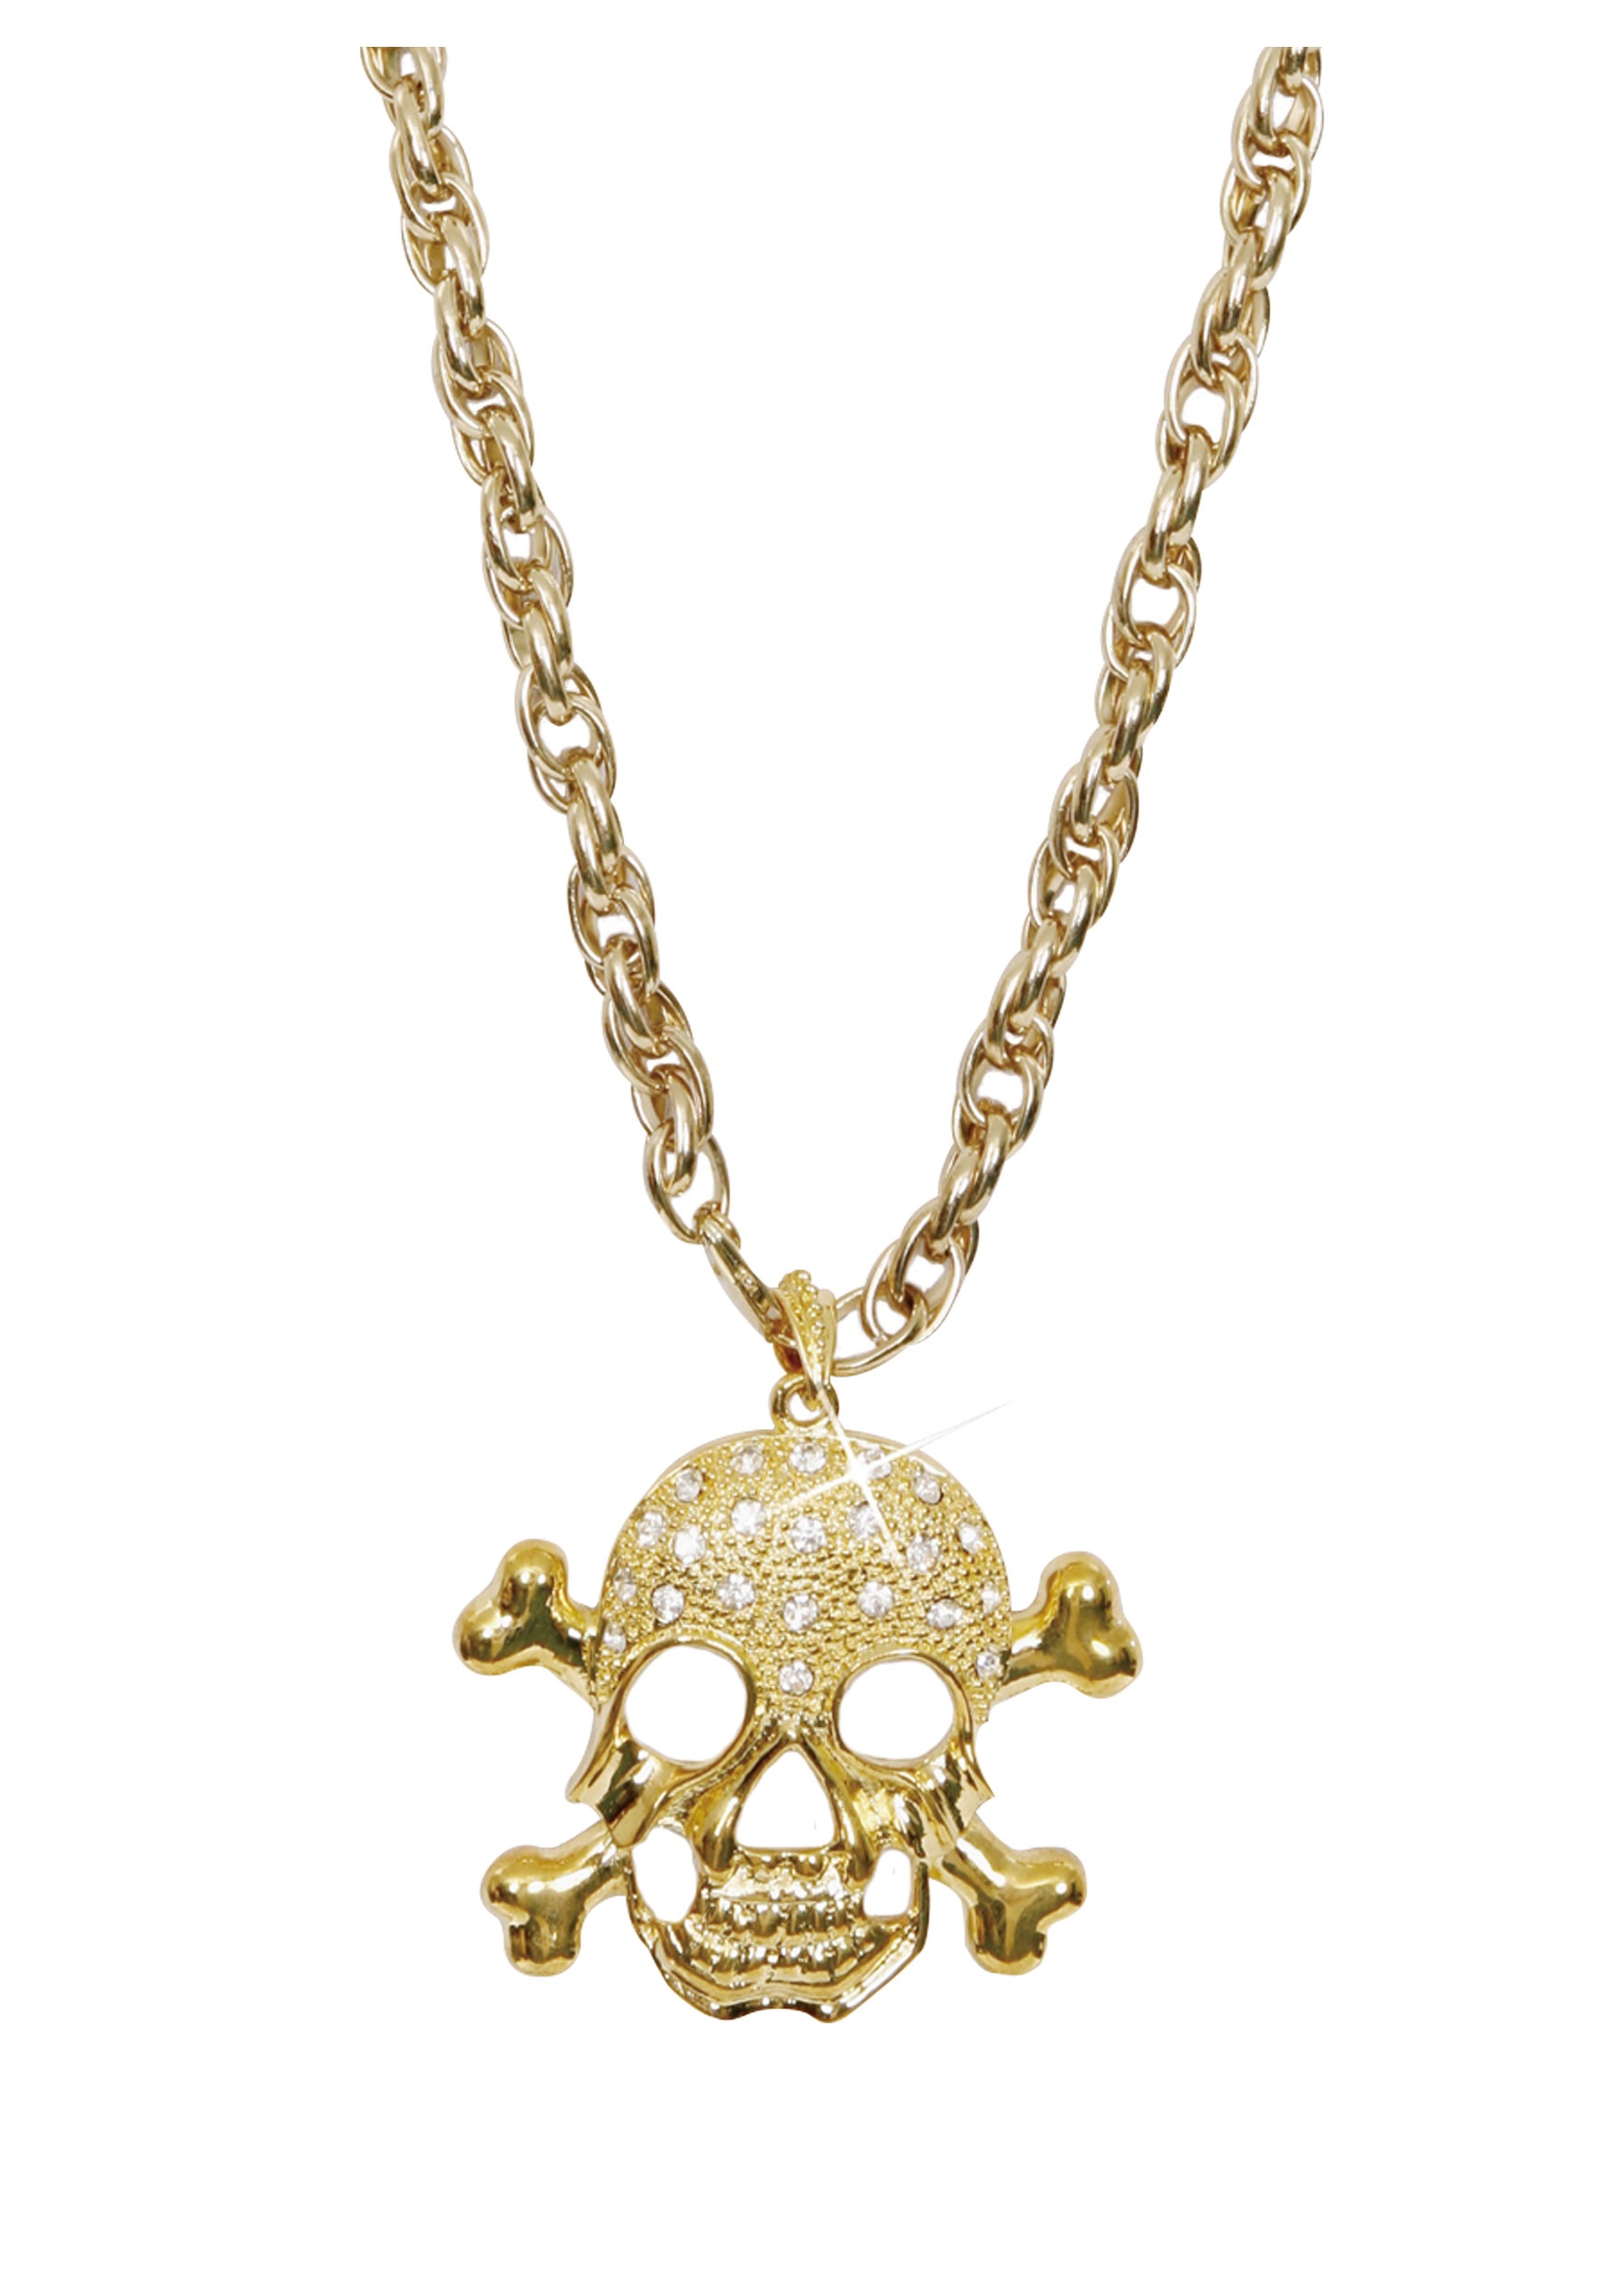 Gold Pirate Necklace | Pirate Accessories & Jewelry